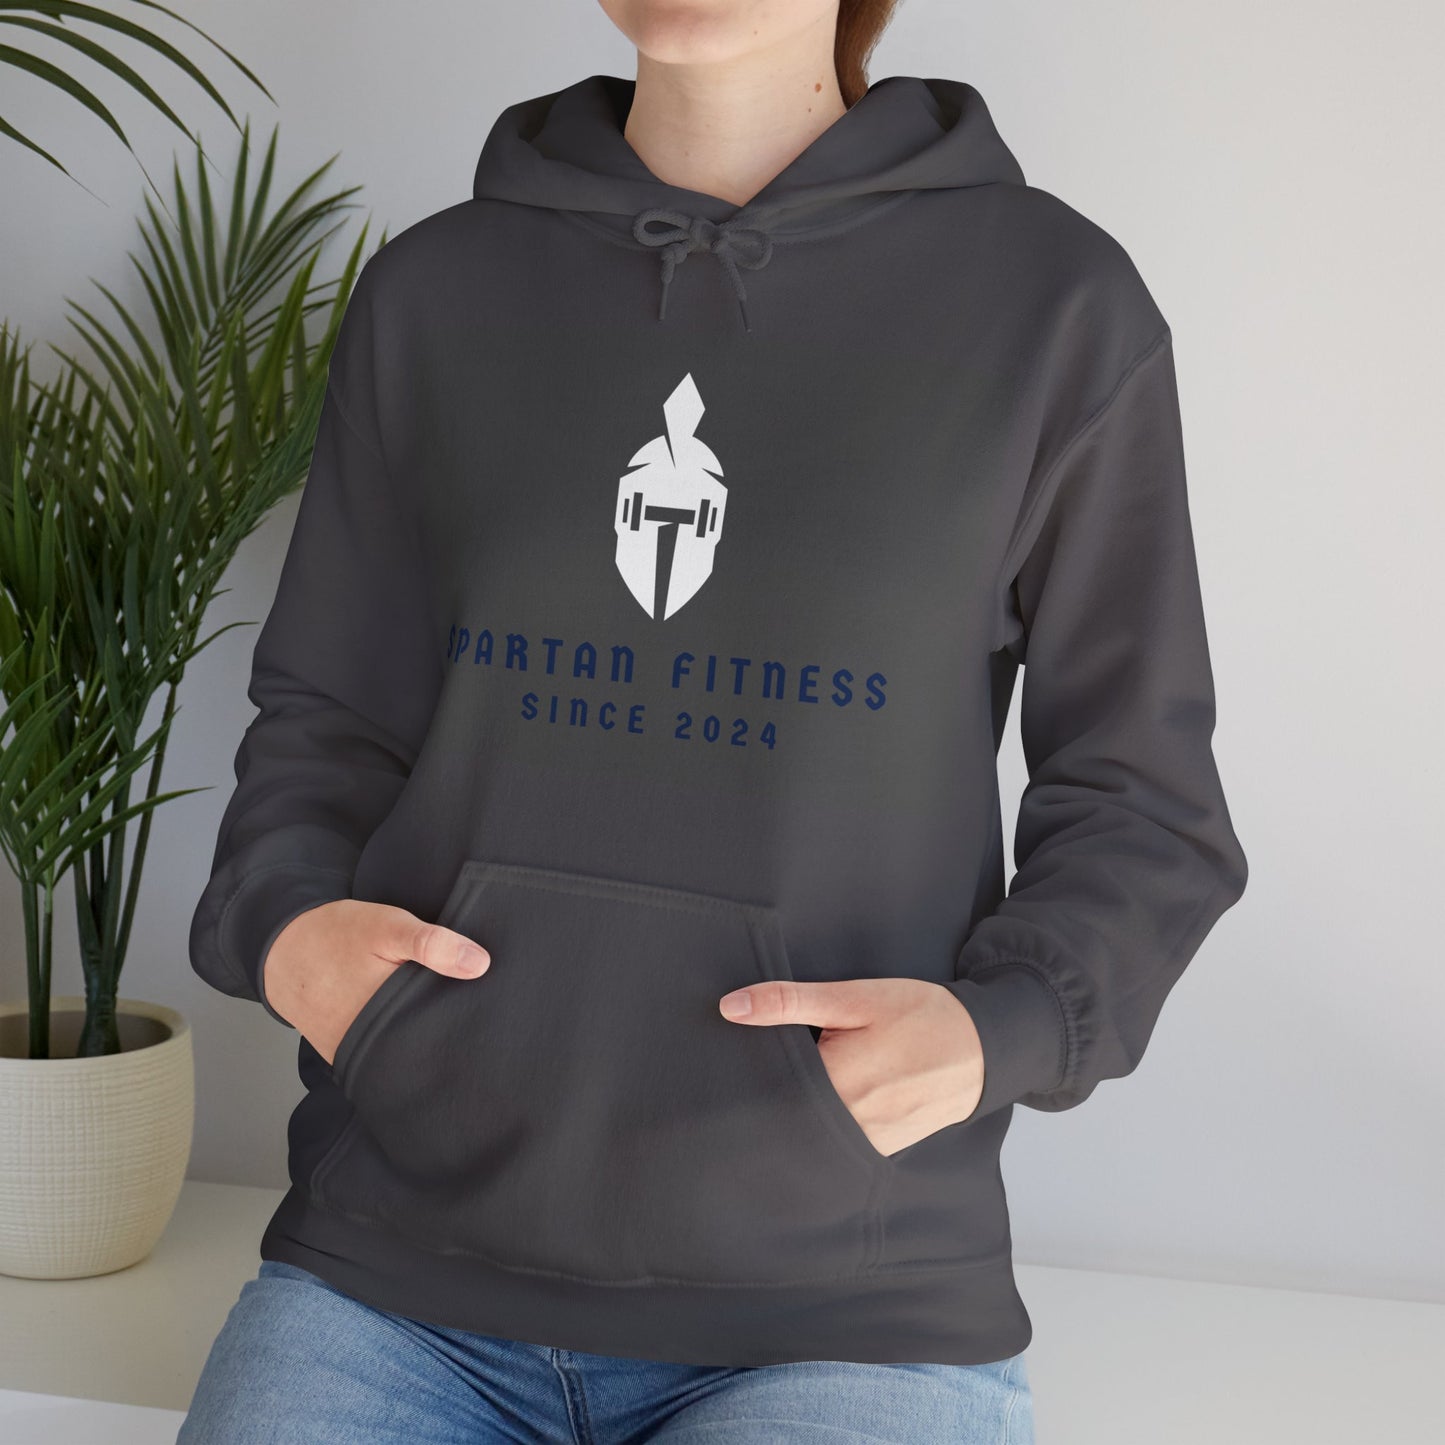 Spartan Fitness Sweatshirt - Charcoal Gray